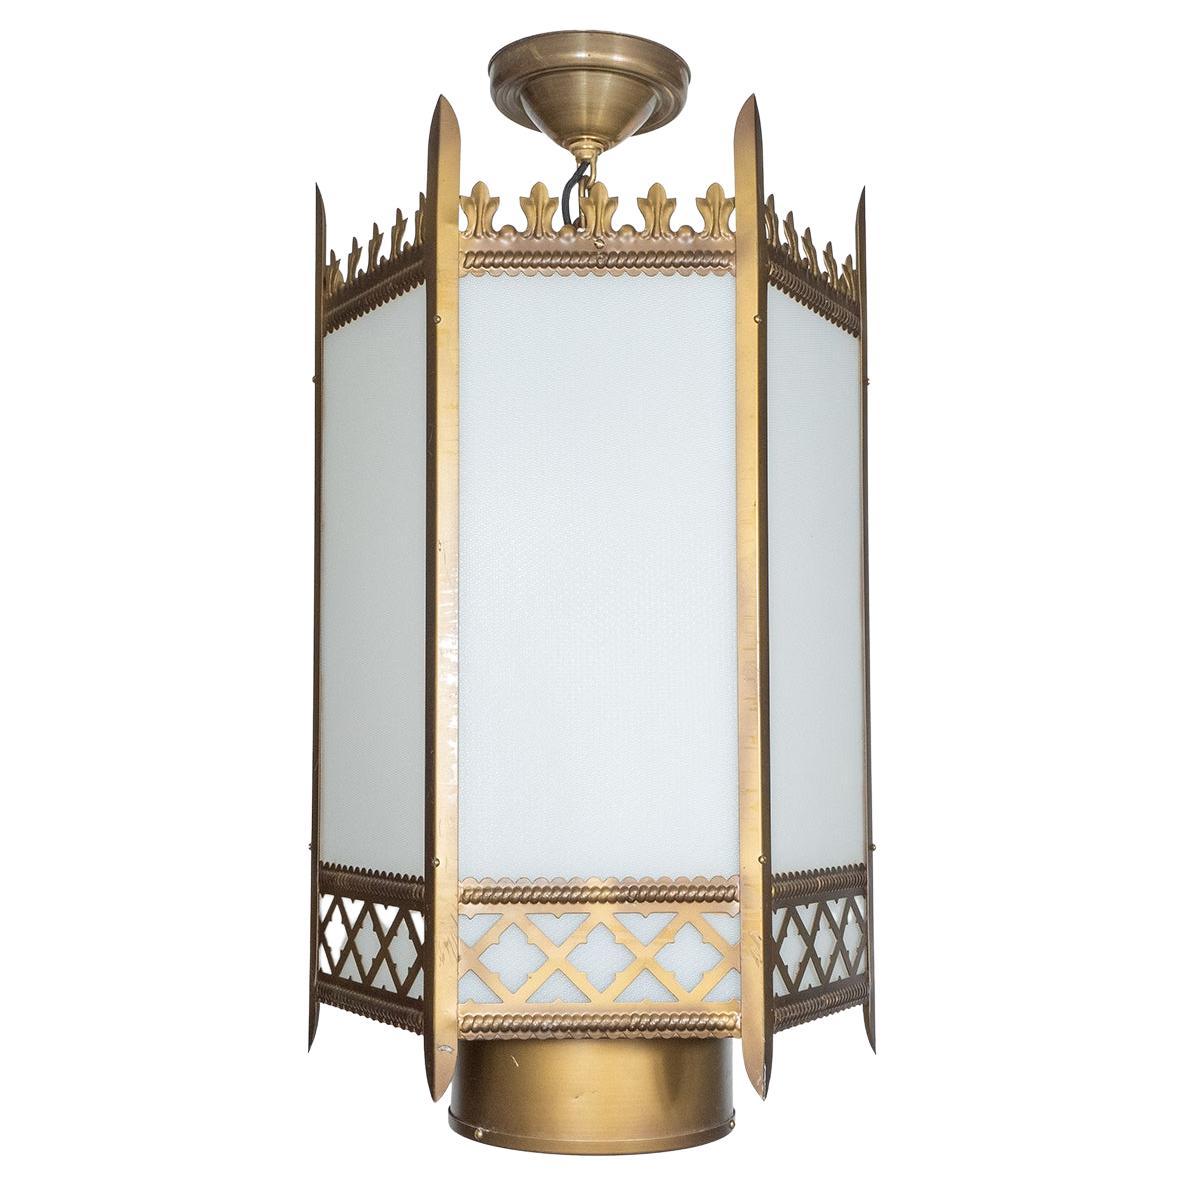 Gothic Revival Metal and Glass "Fleur" Motif Lantern Style Pendant